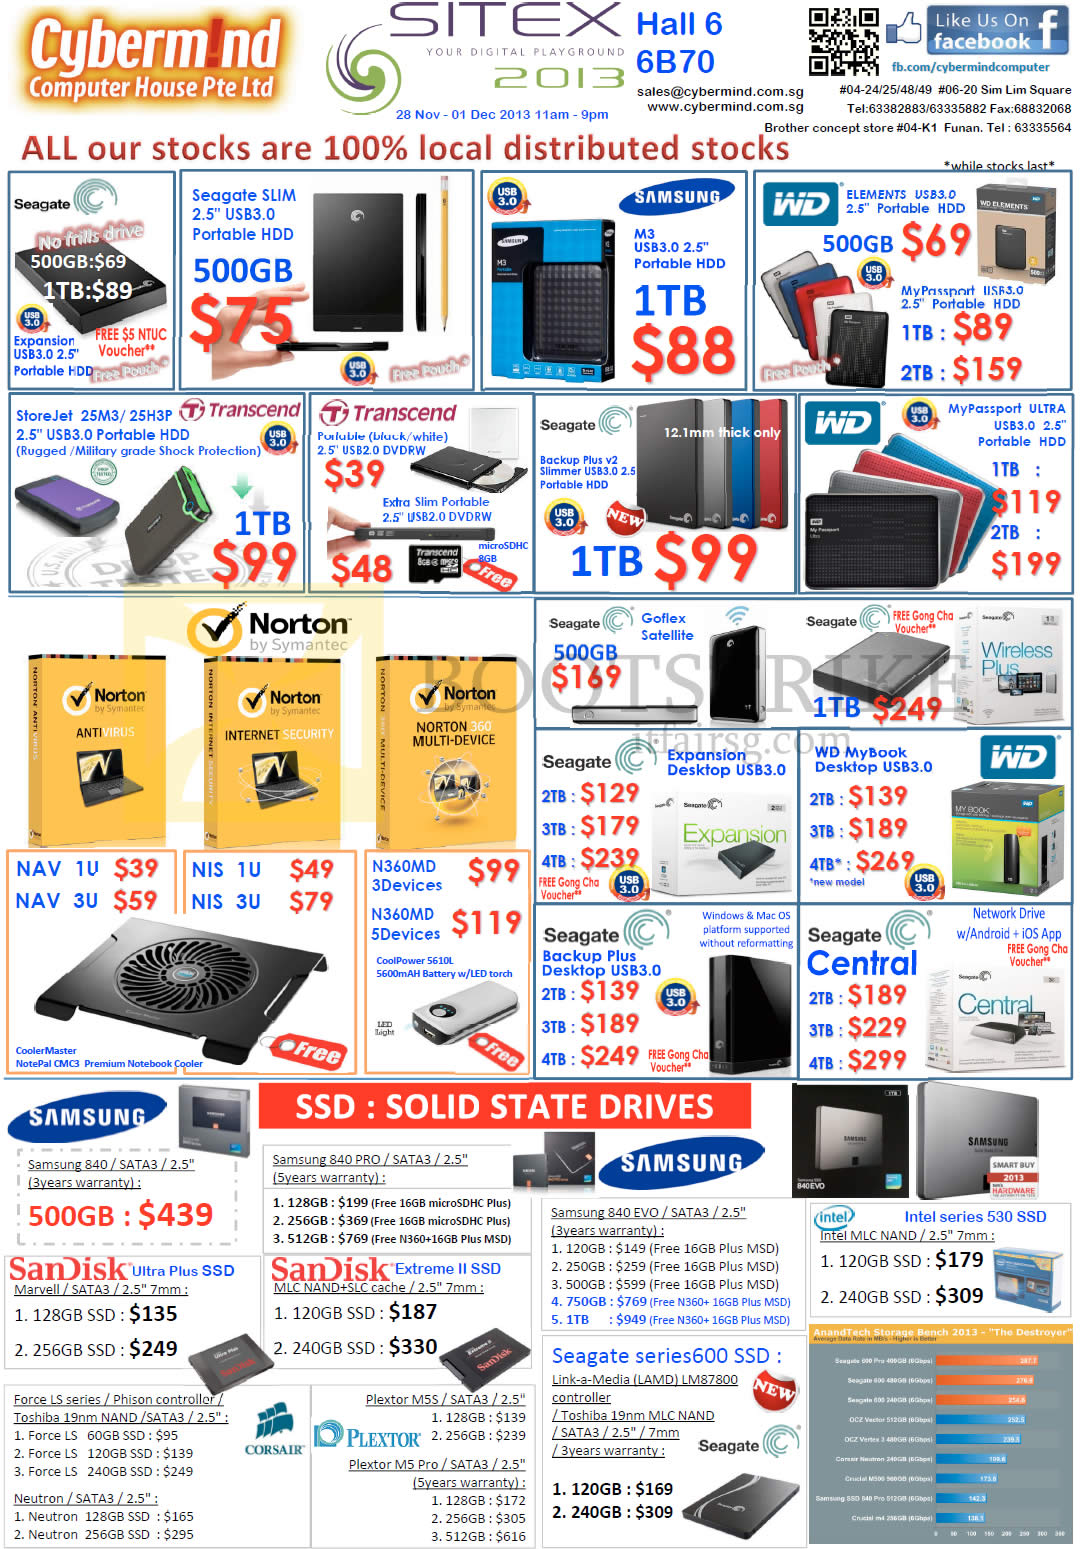 SITEX 2013 price list image brochure of Cybermind External Storage Seagate, Slim, Samsung M3, WD Elements Passport, Transcend Storejet, Norton, 500GB 1TB 2TB 3TB 4TB, SSD Intel Sandisk Plextor